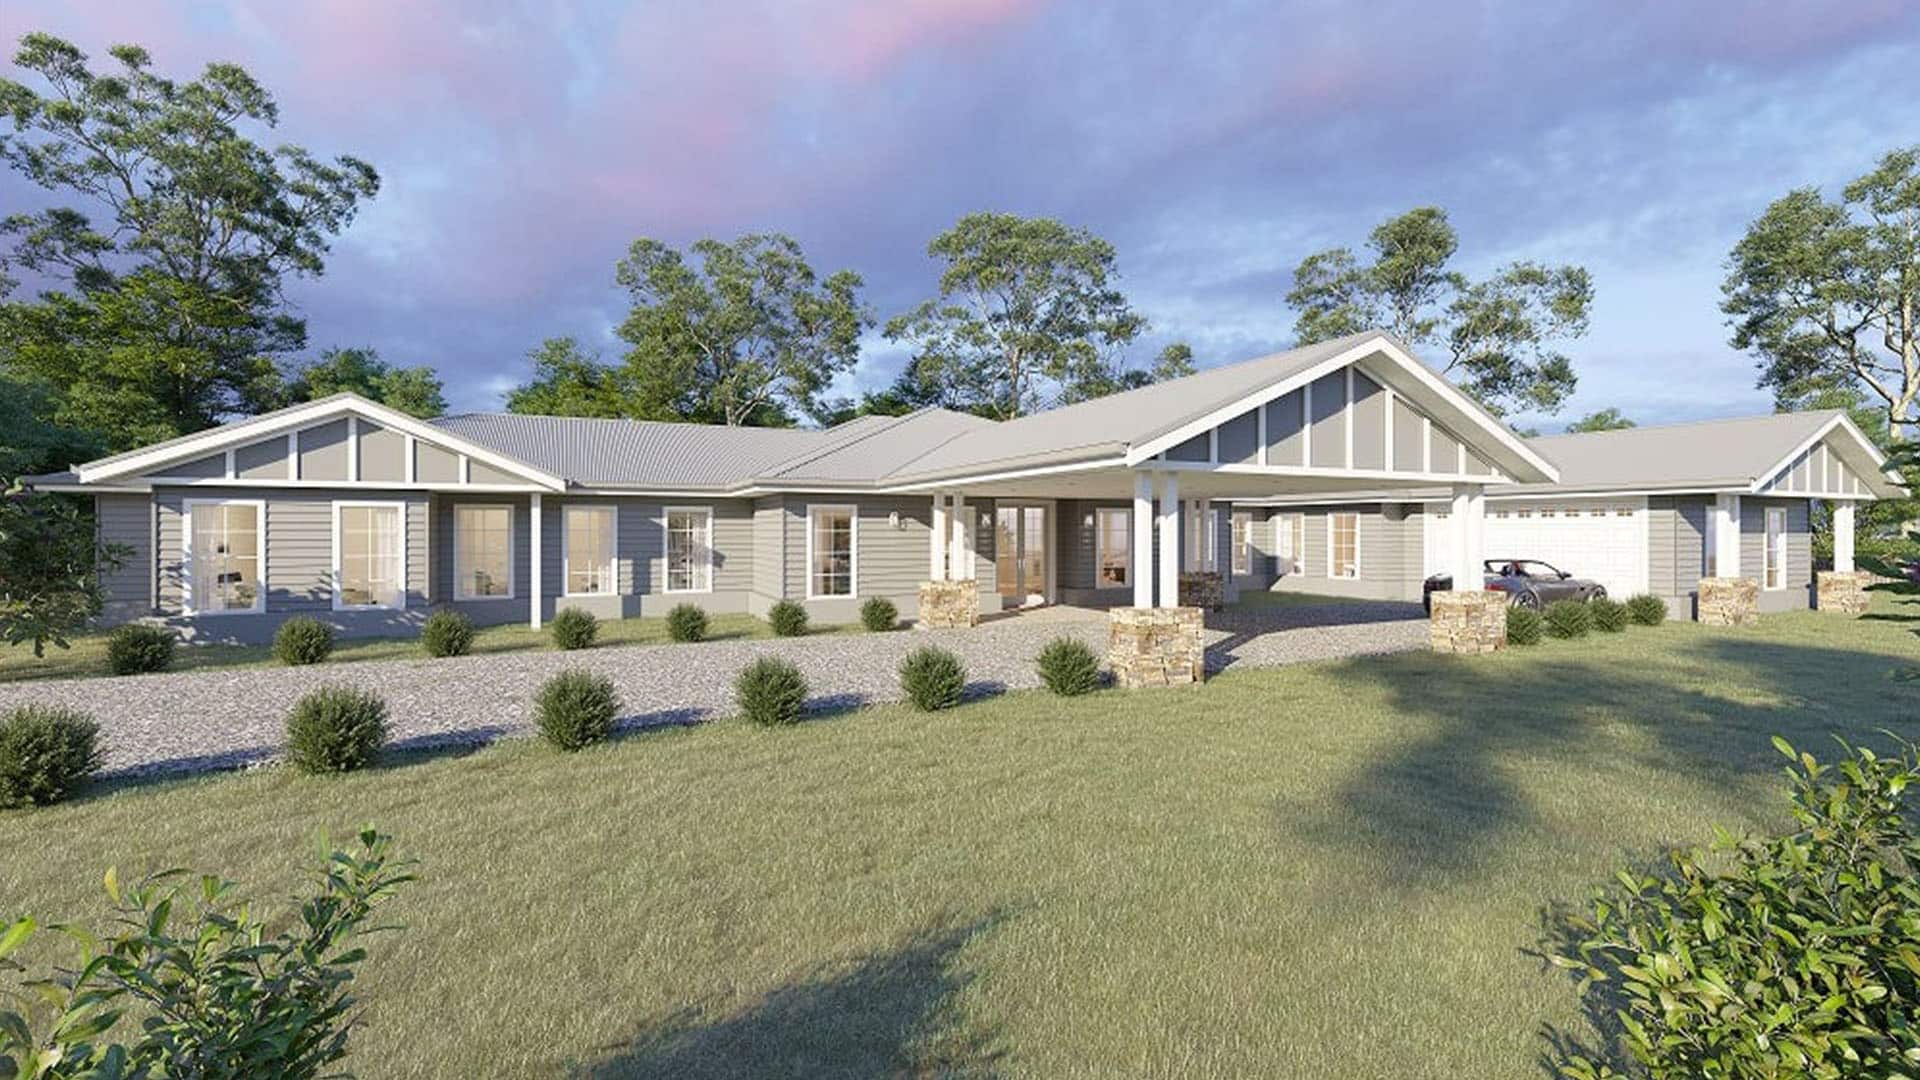 acreage home designs - Jimboomba Home Designs